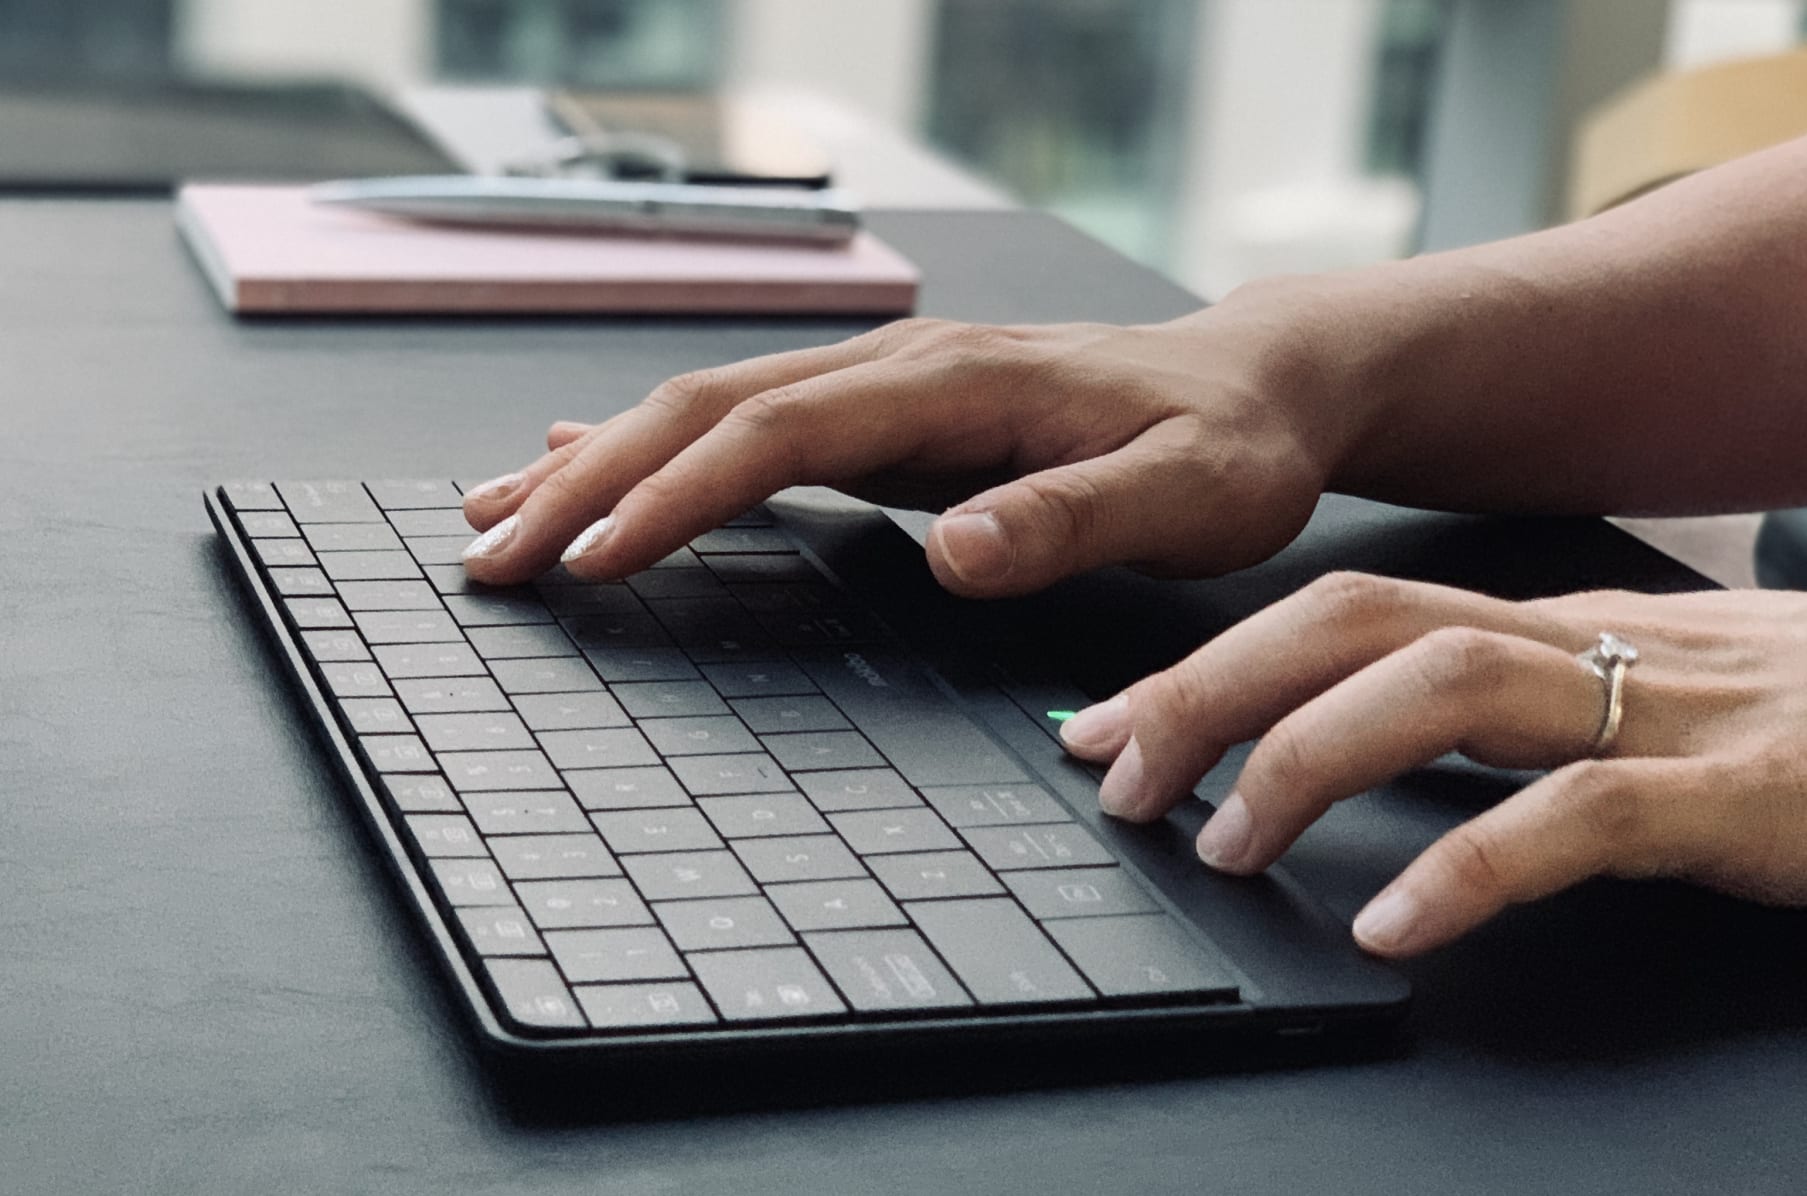 Mokibo: 2-in-1 Touchpad Fusion Keyboard | Indiegogo